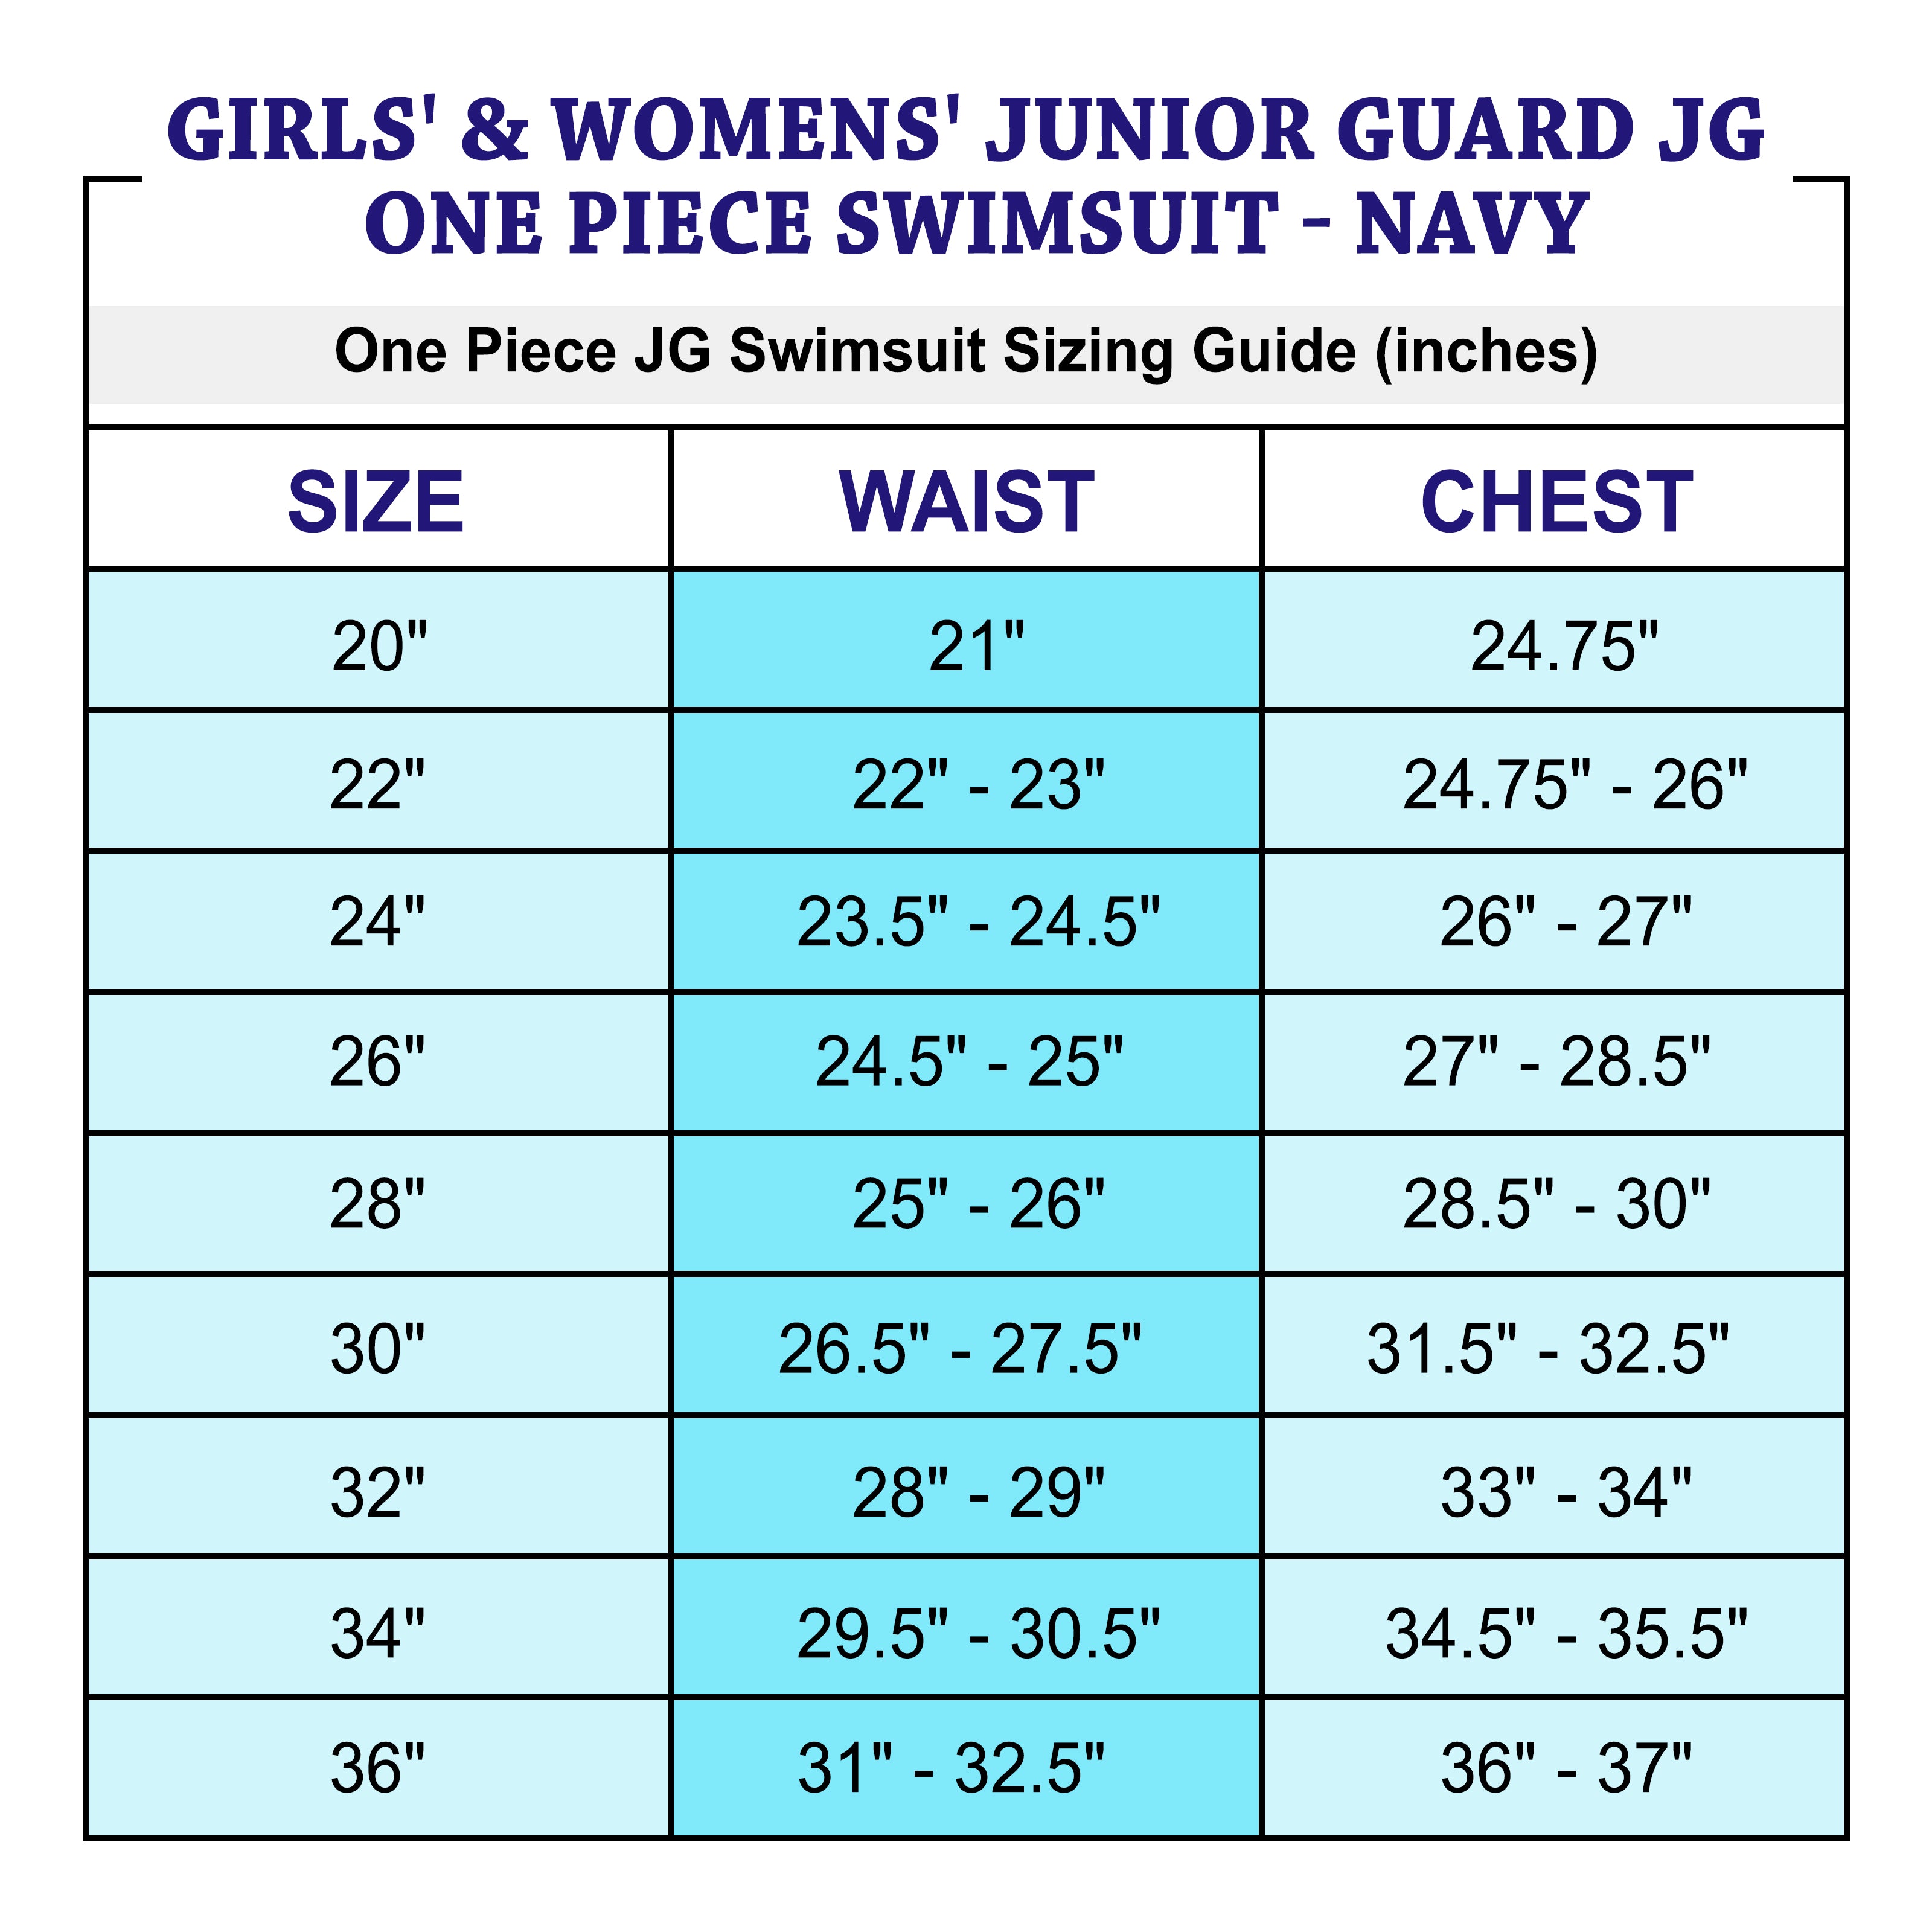 Girls' & Womens' Junior Guard One Piece Swimsuit -Navy (Sizes 20